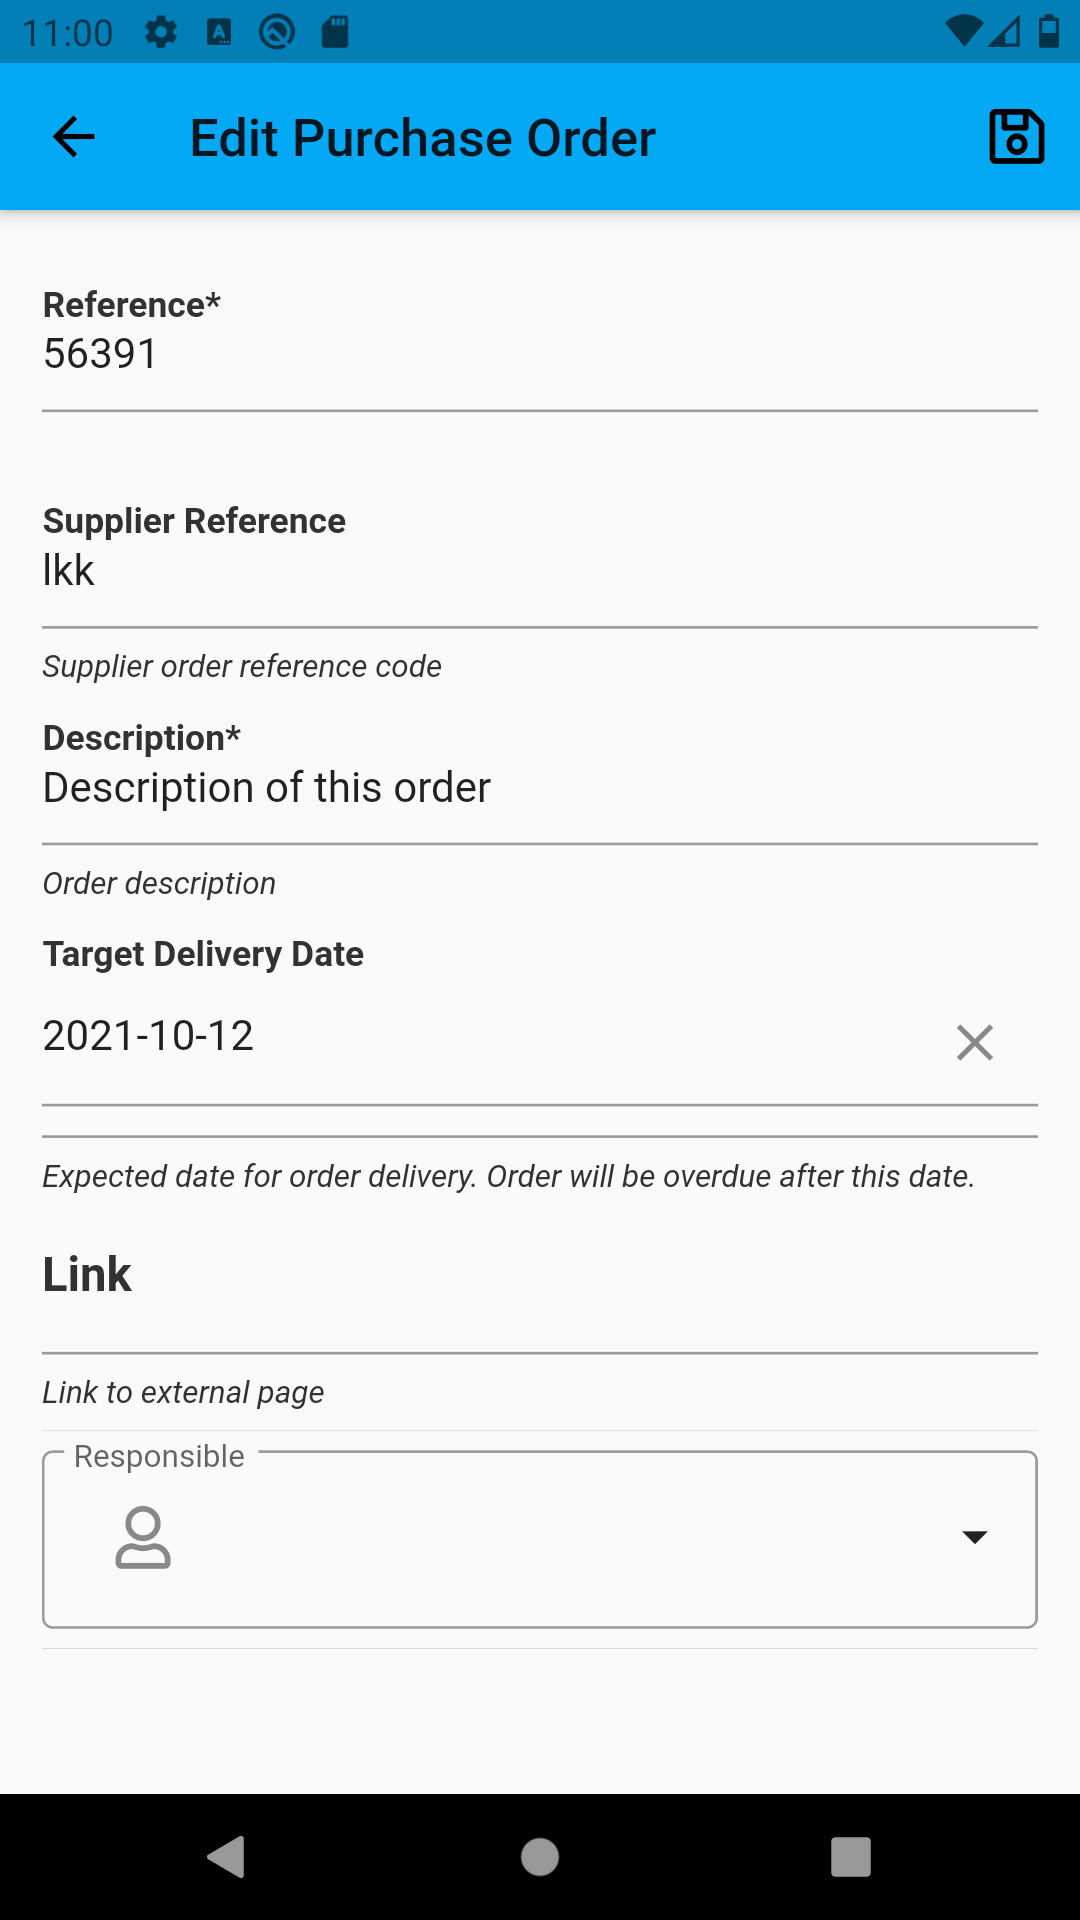 Edit purchase order